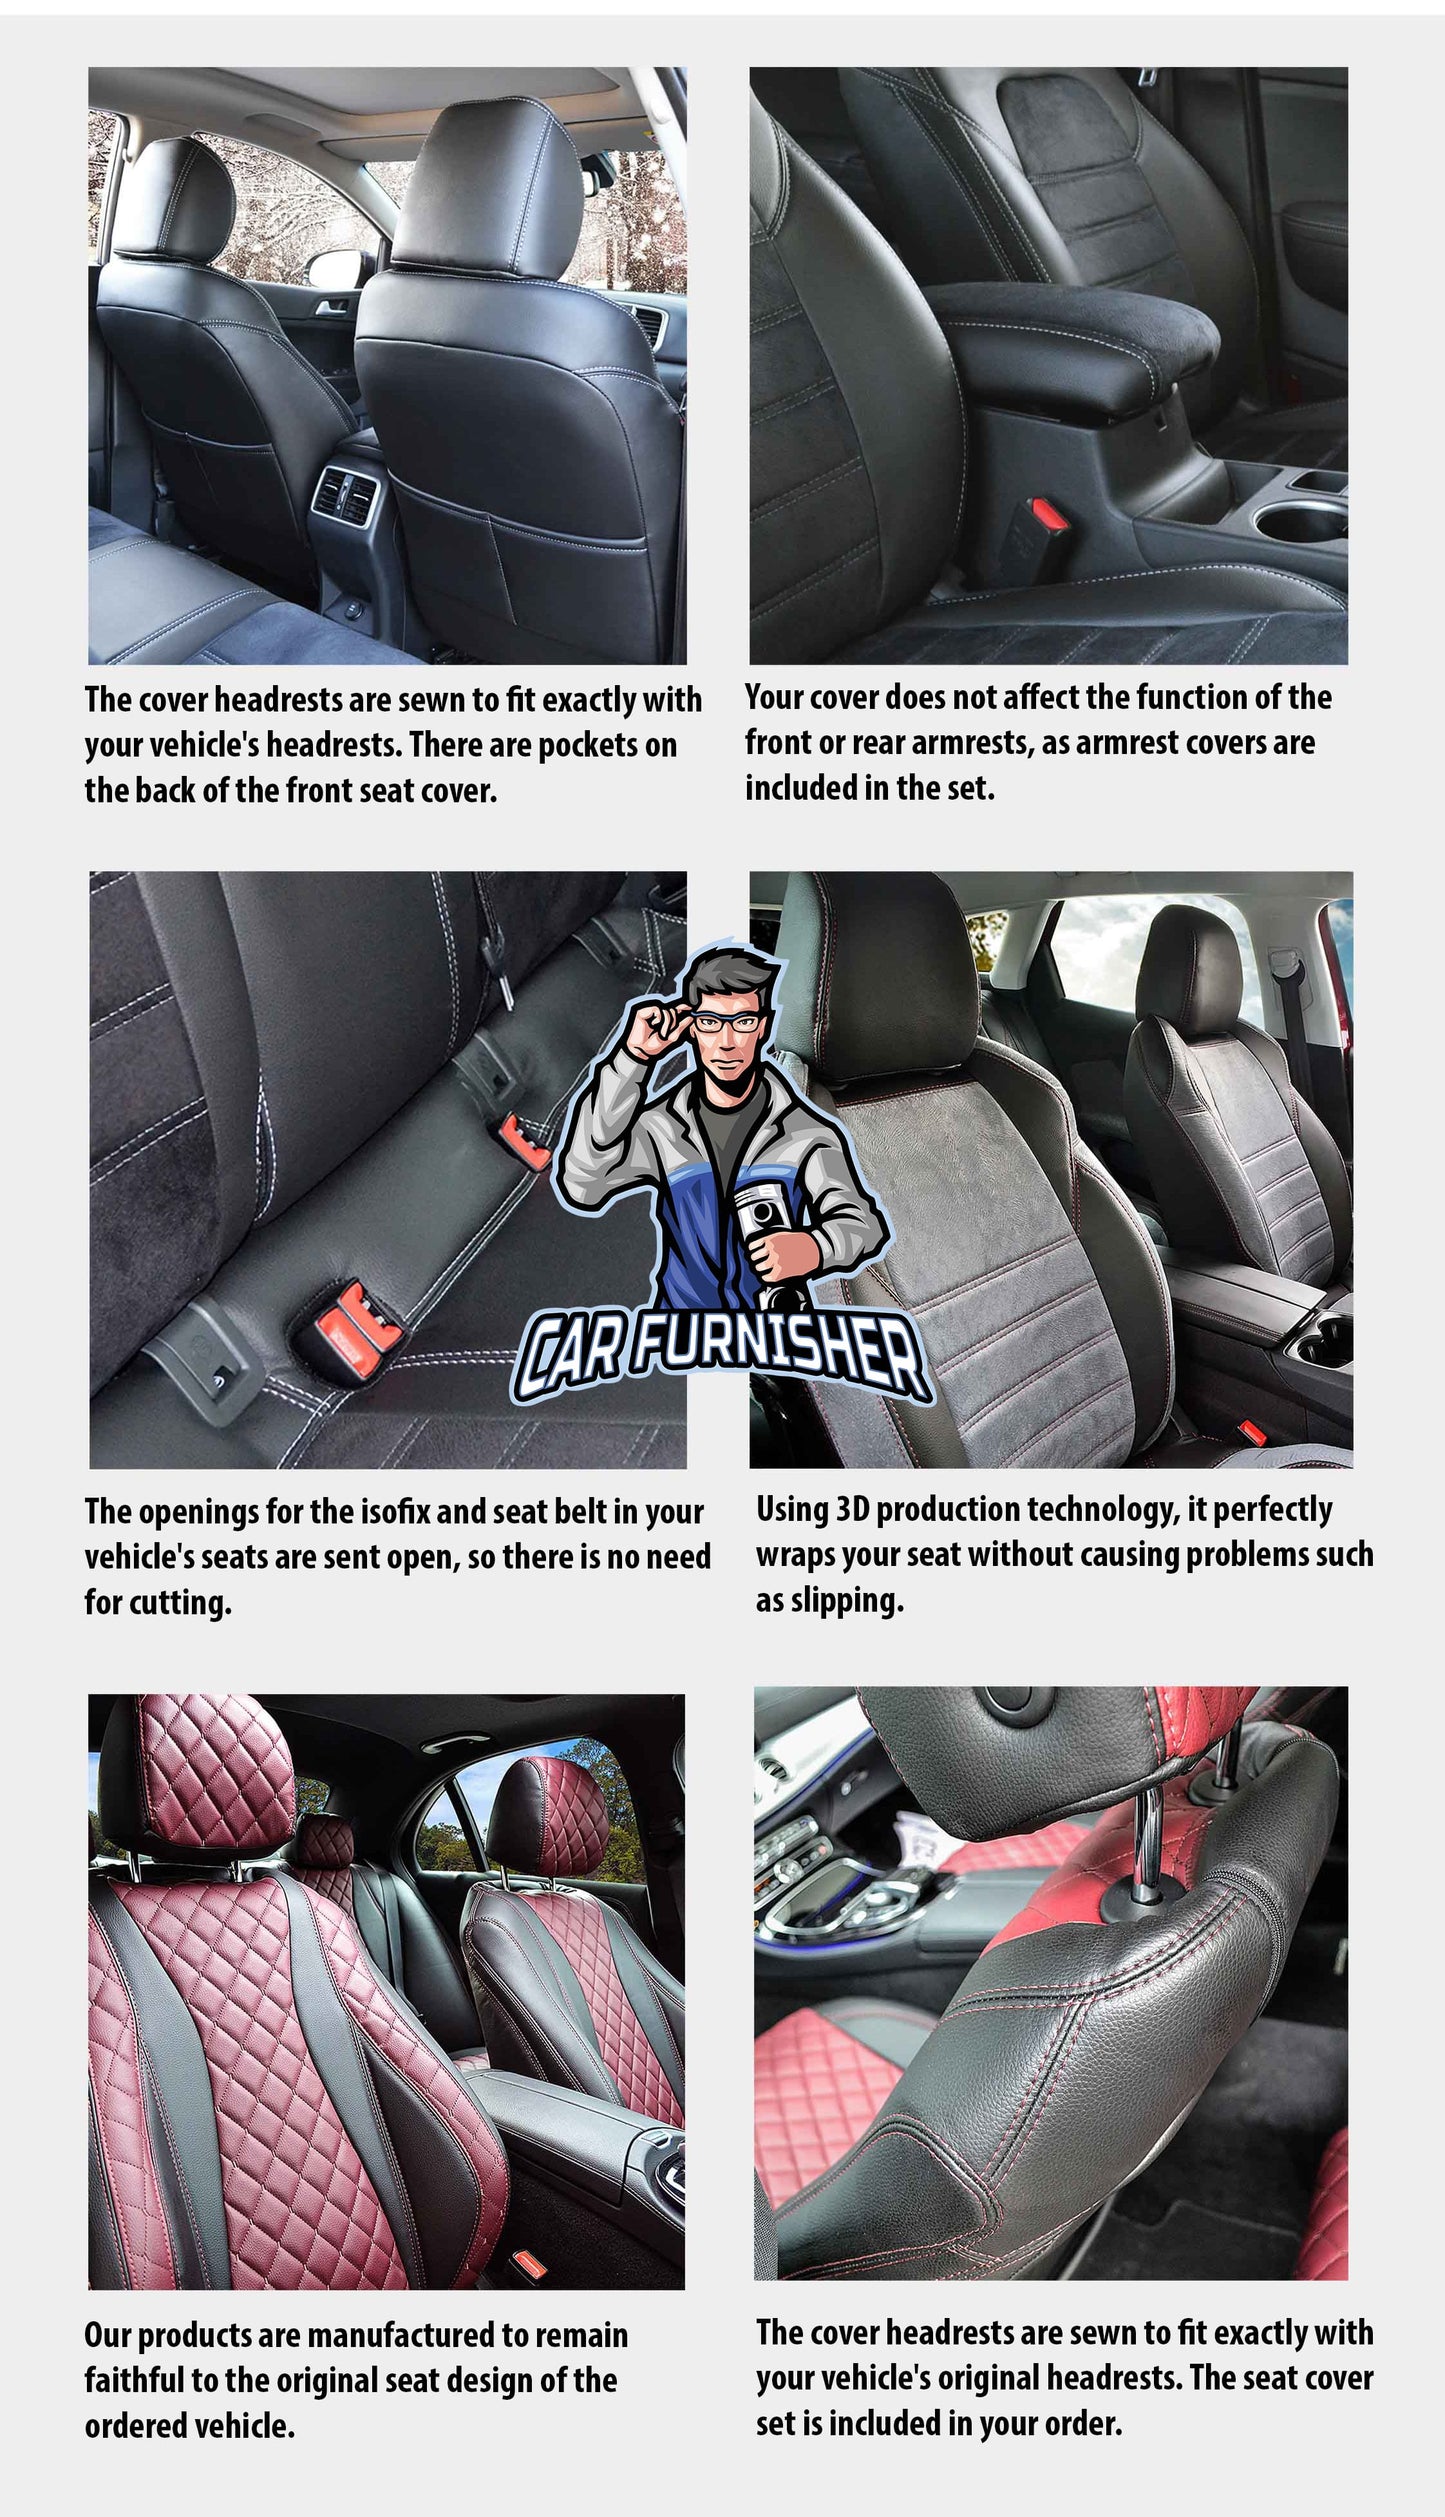 Fiat Stilo Seat Covers Milano Suede Design Black Leather & Suede Fabric